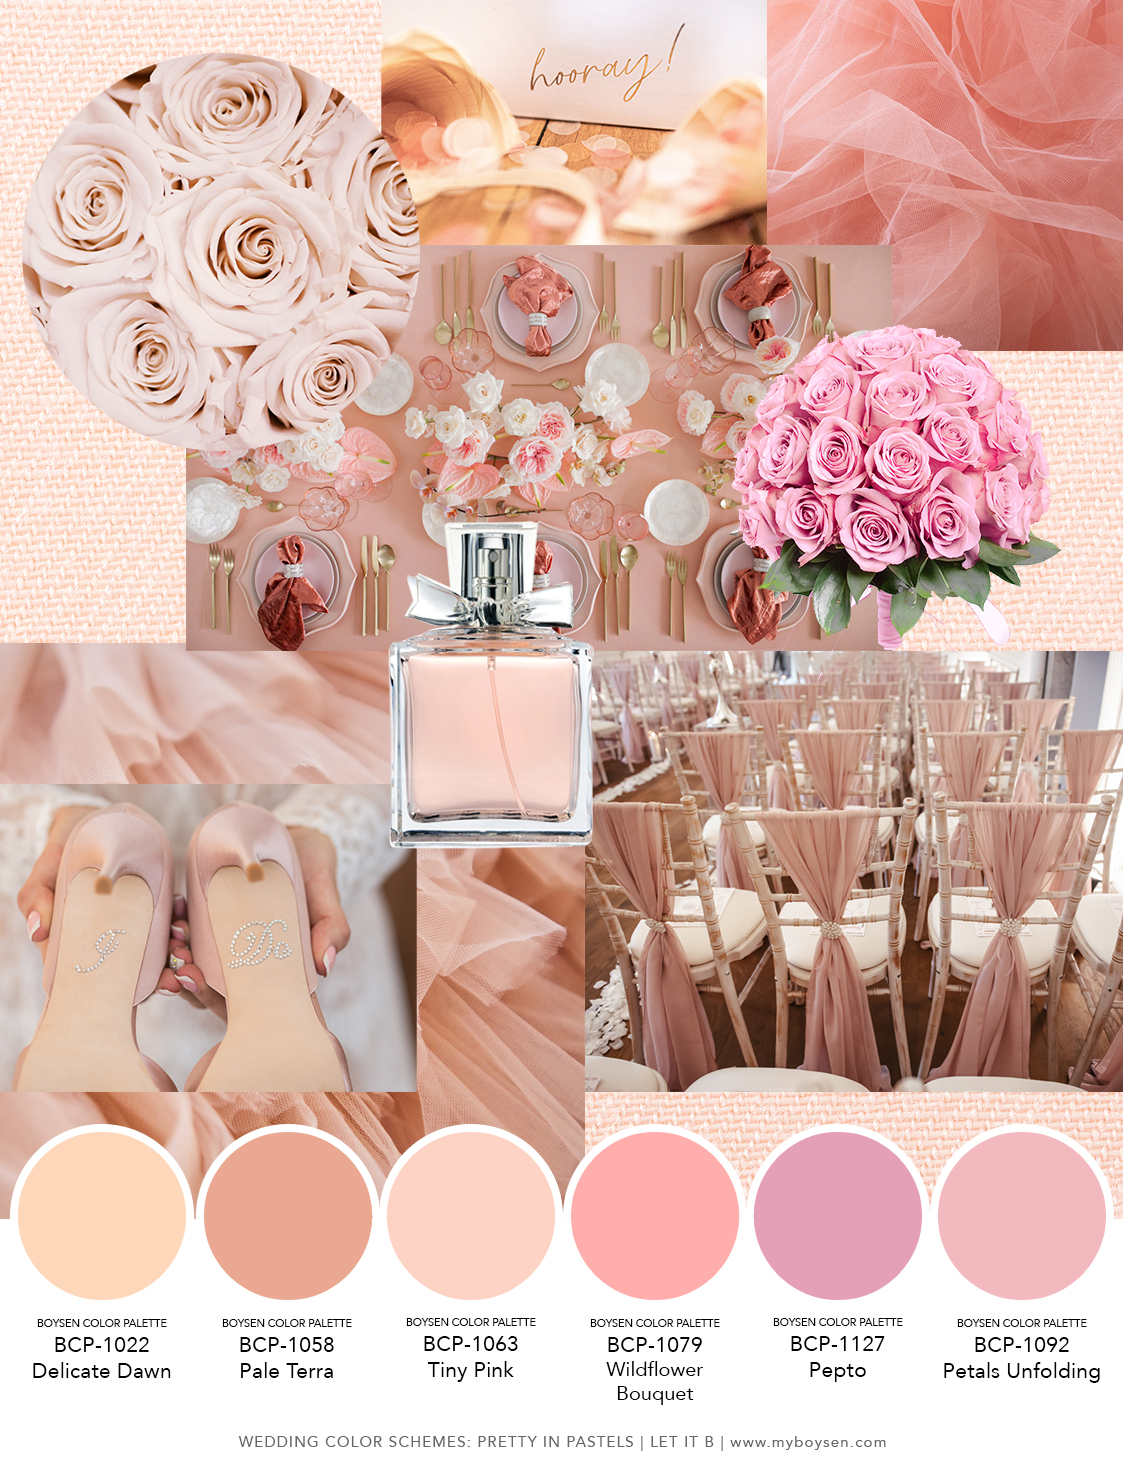 Wedding Color Schemes: Pretty in Pastels | MyBoysen